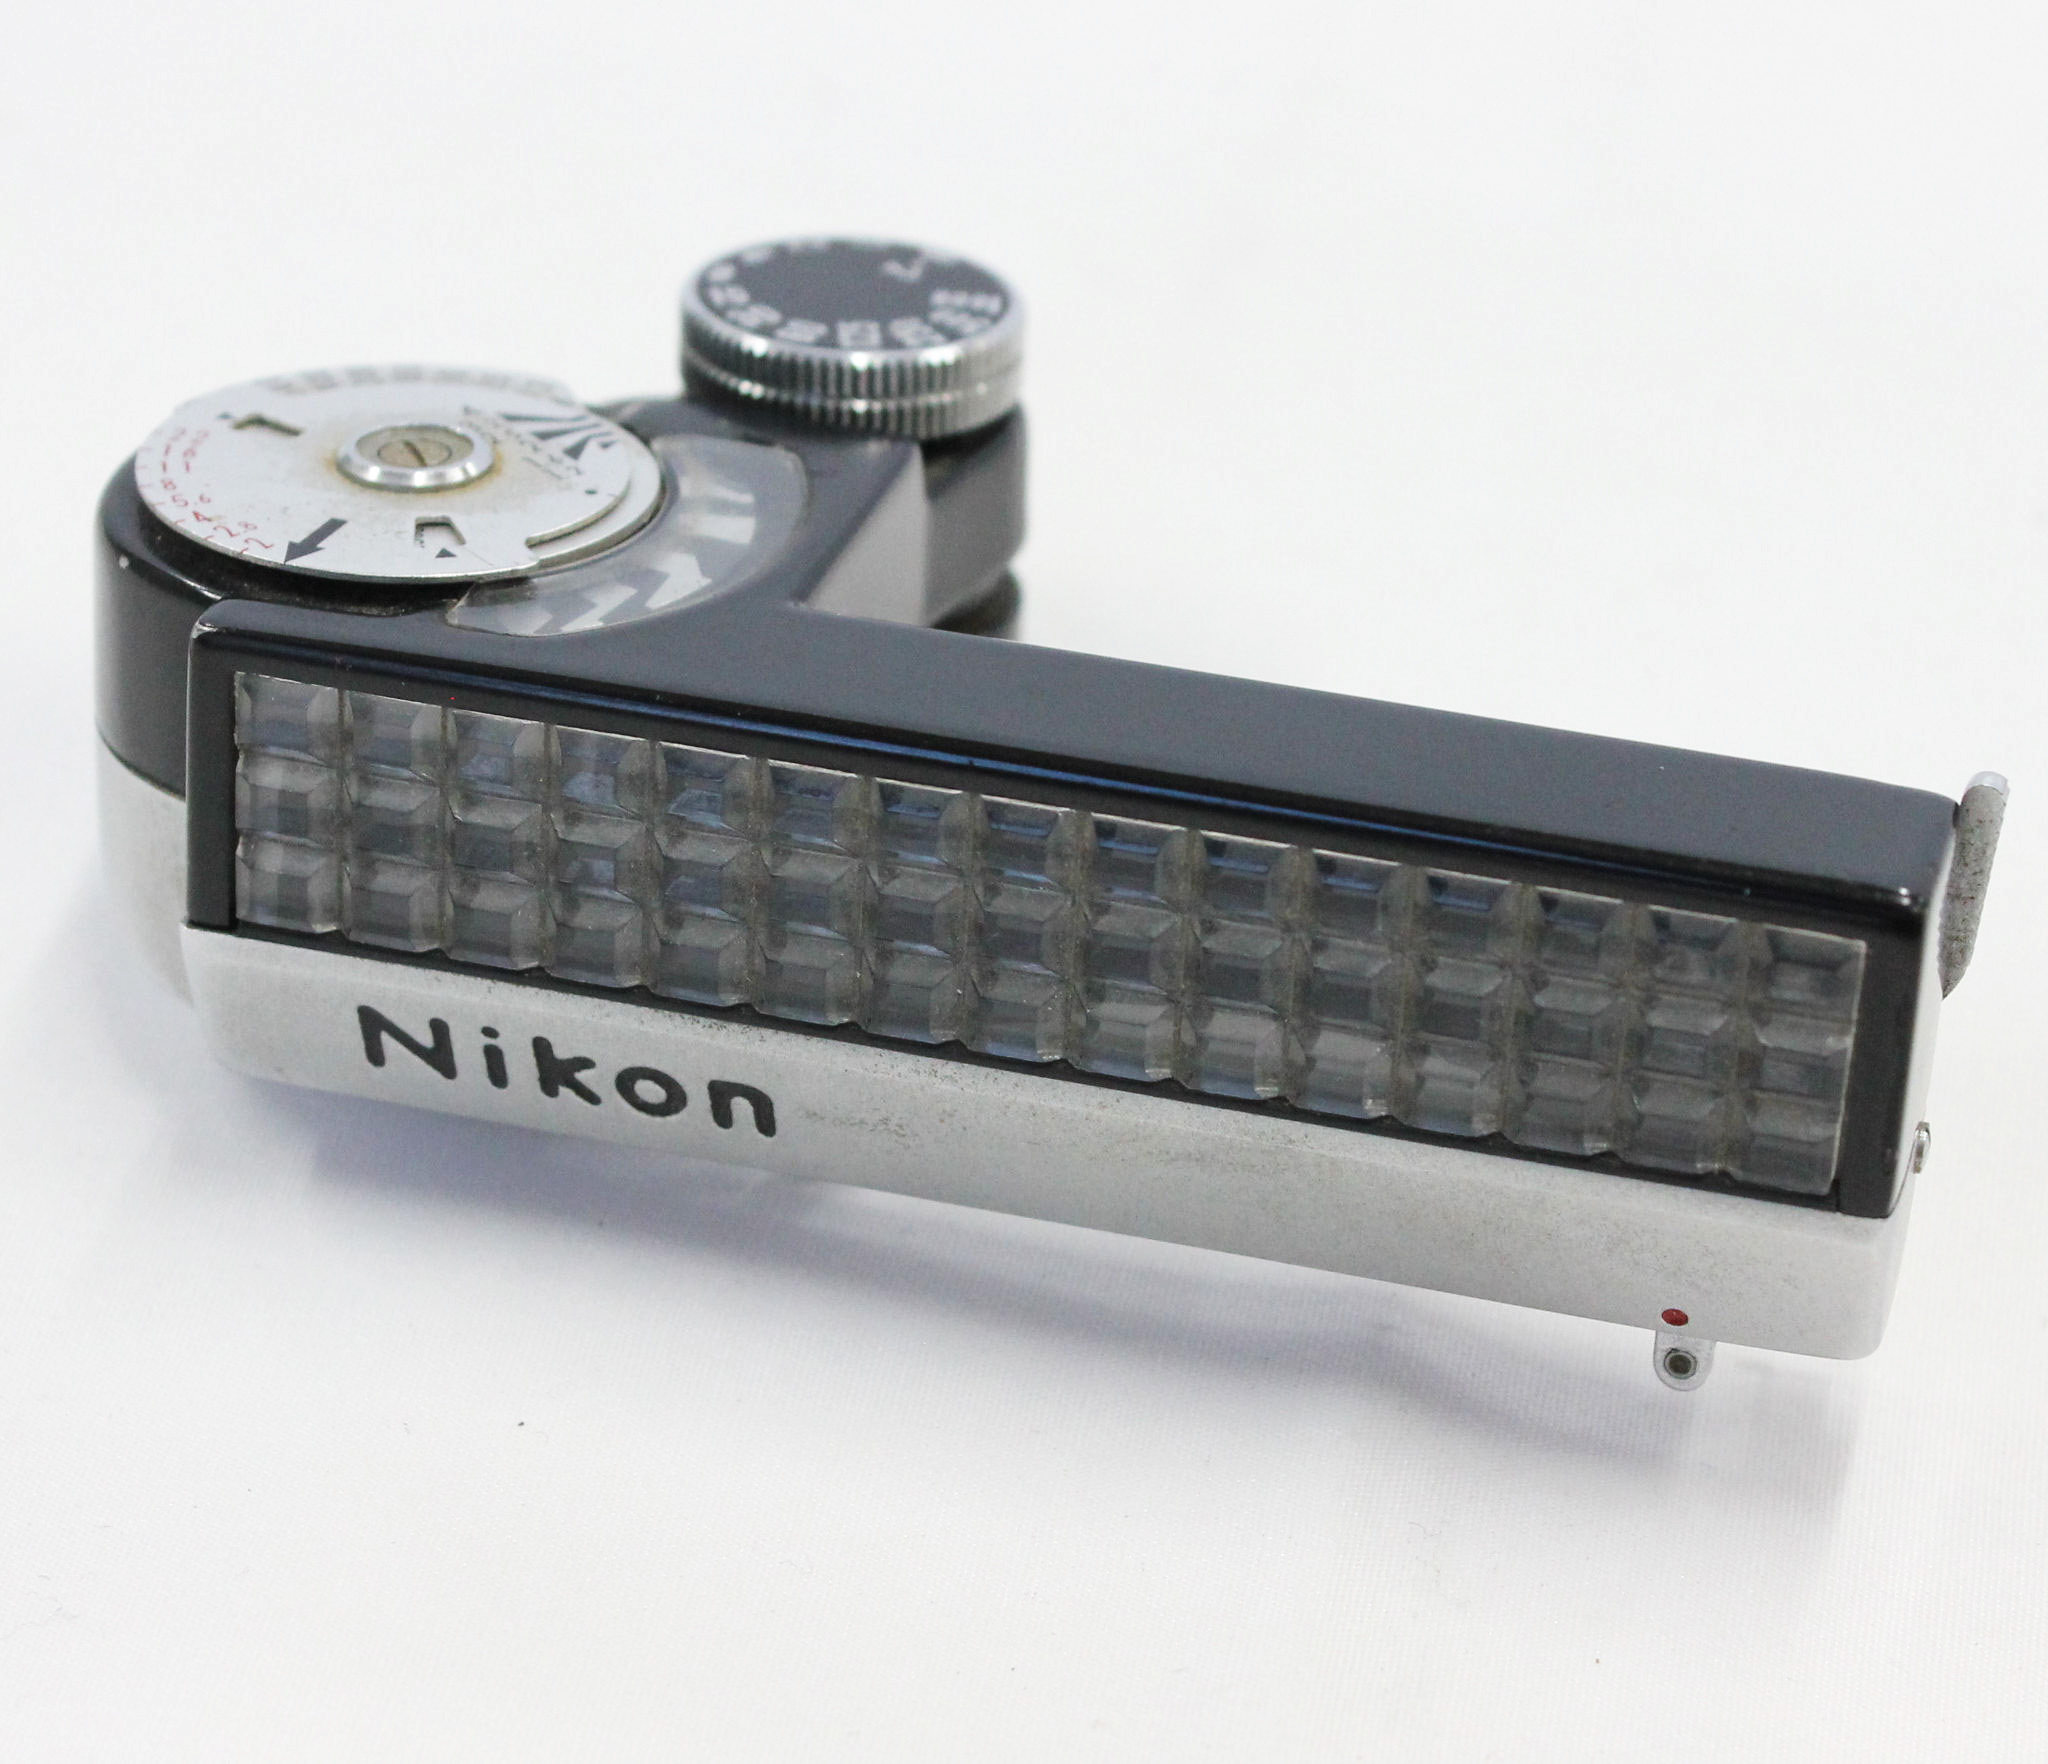  Nikon F Exposure Meter Model 2 from Japan  Photo 0